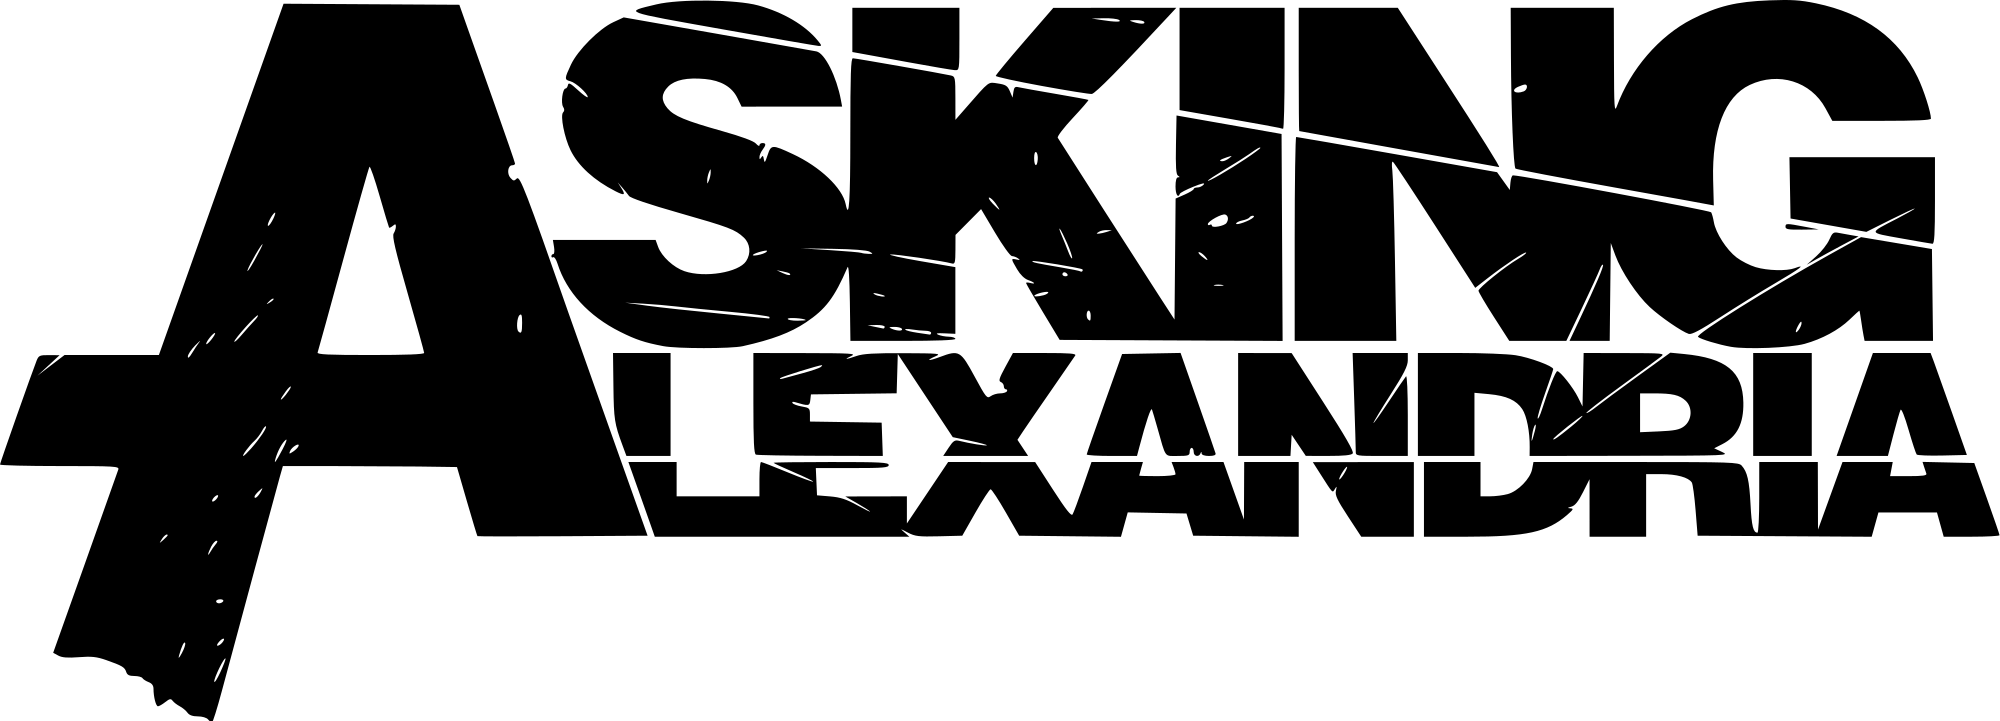 Asking Alexandria Logo - File:Asking Alexandria logo.svg - Wikimedia Commons